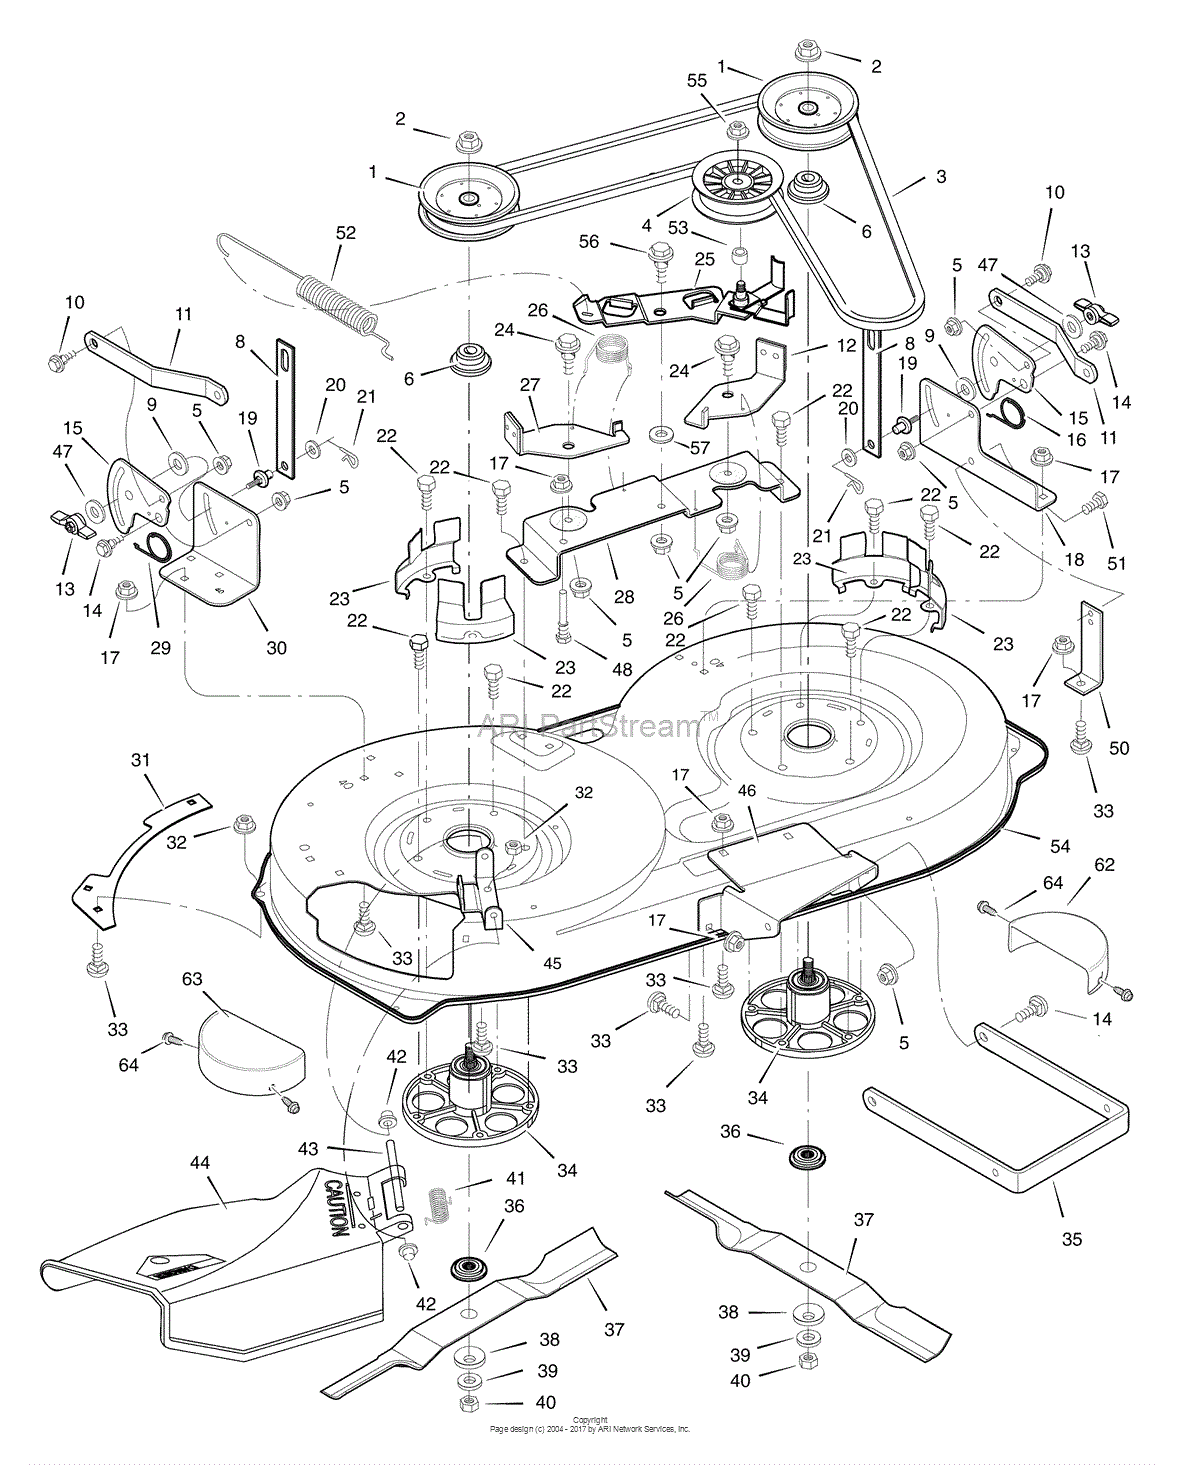 Murray 7800292 - 385002x108C, Lawn Tractor Rover (2008) Parts Diagram ...